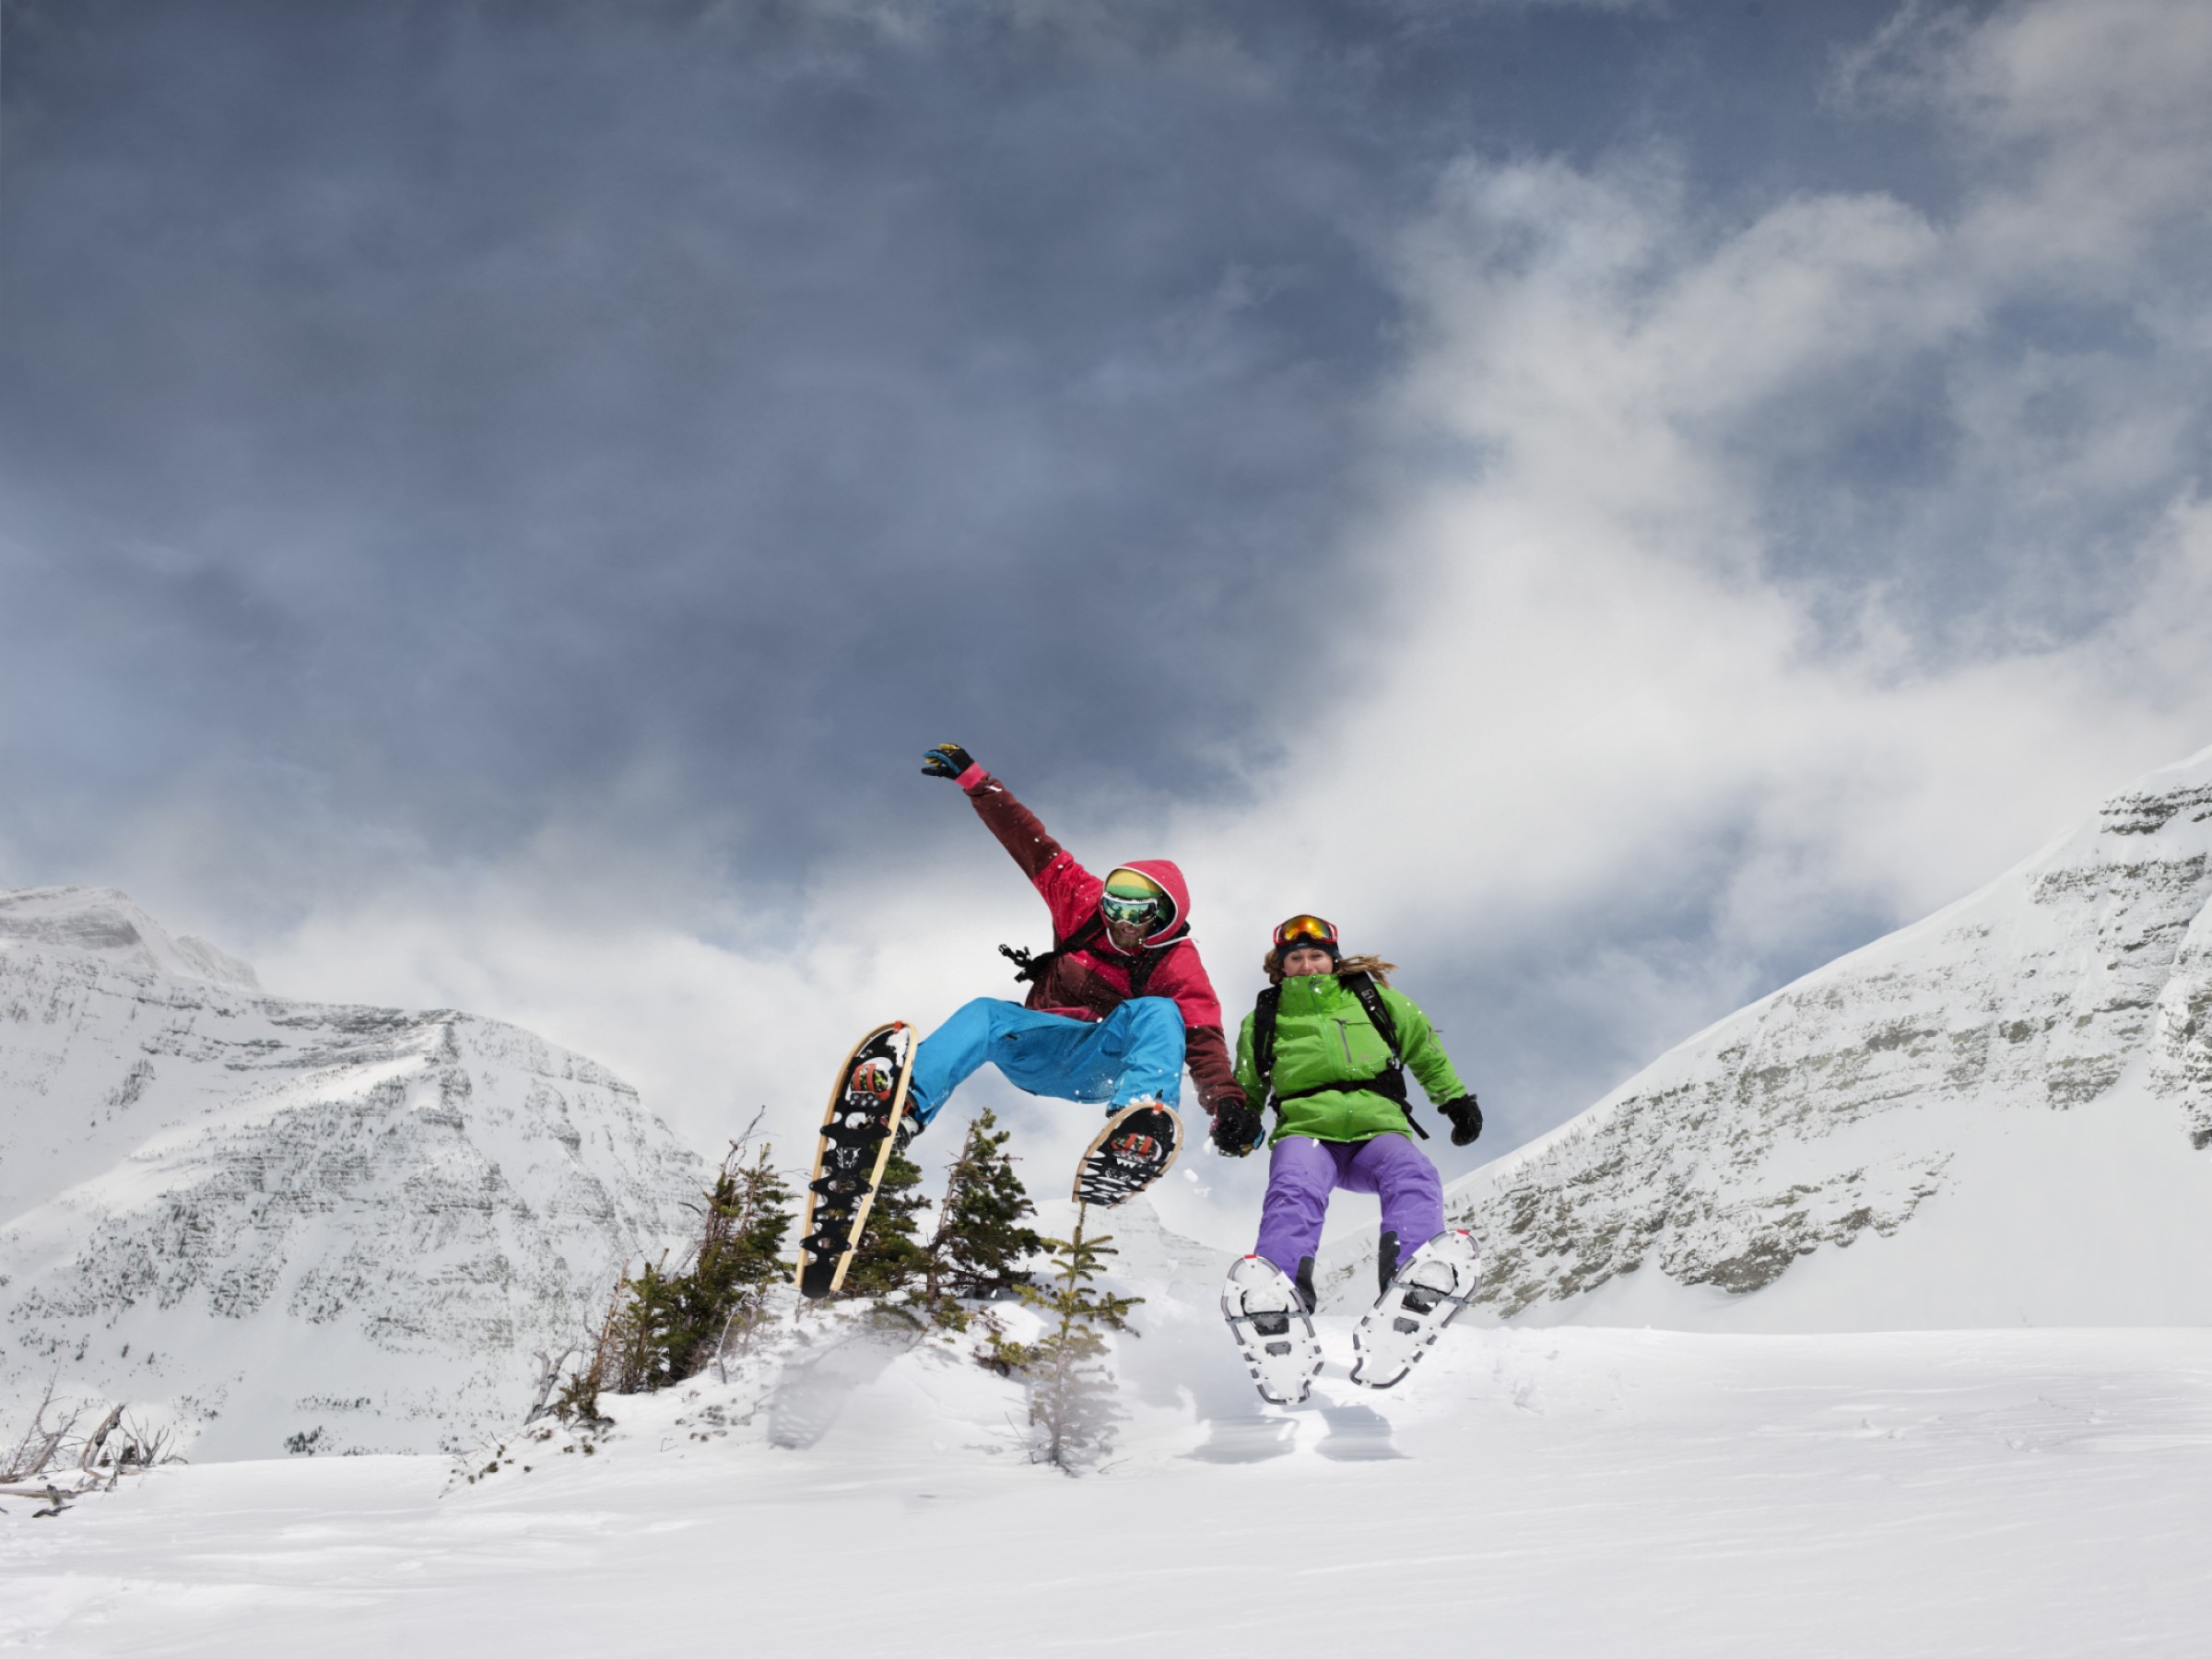 NEVICA BANFF LENS Adults Ski Snow Winter Sports Spare Blue Lens